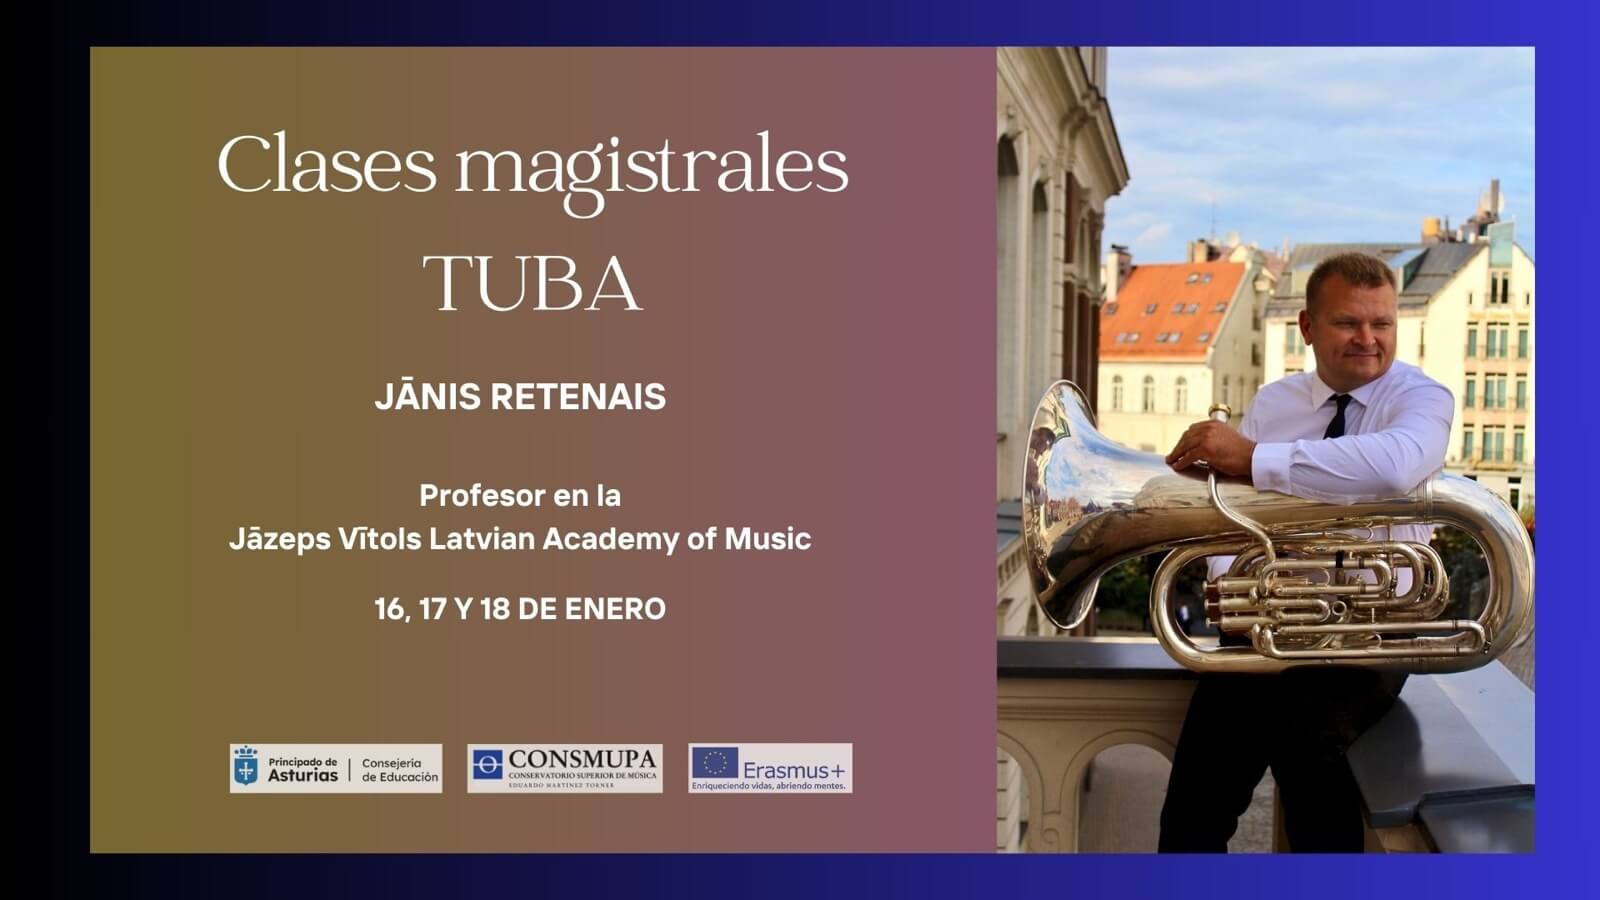 CLASES MAGISTRALES DE TUBA – JANIS RETENAIS